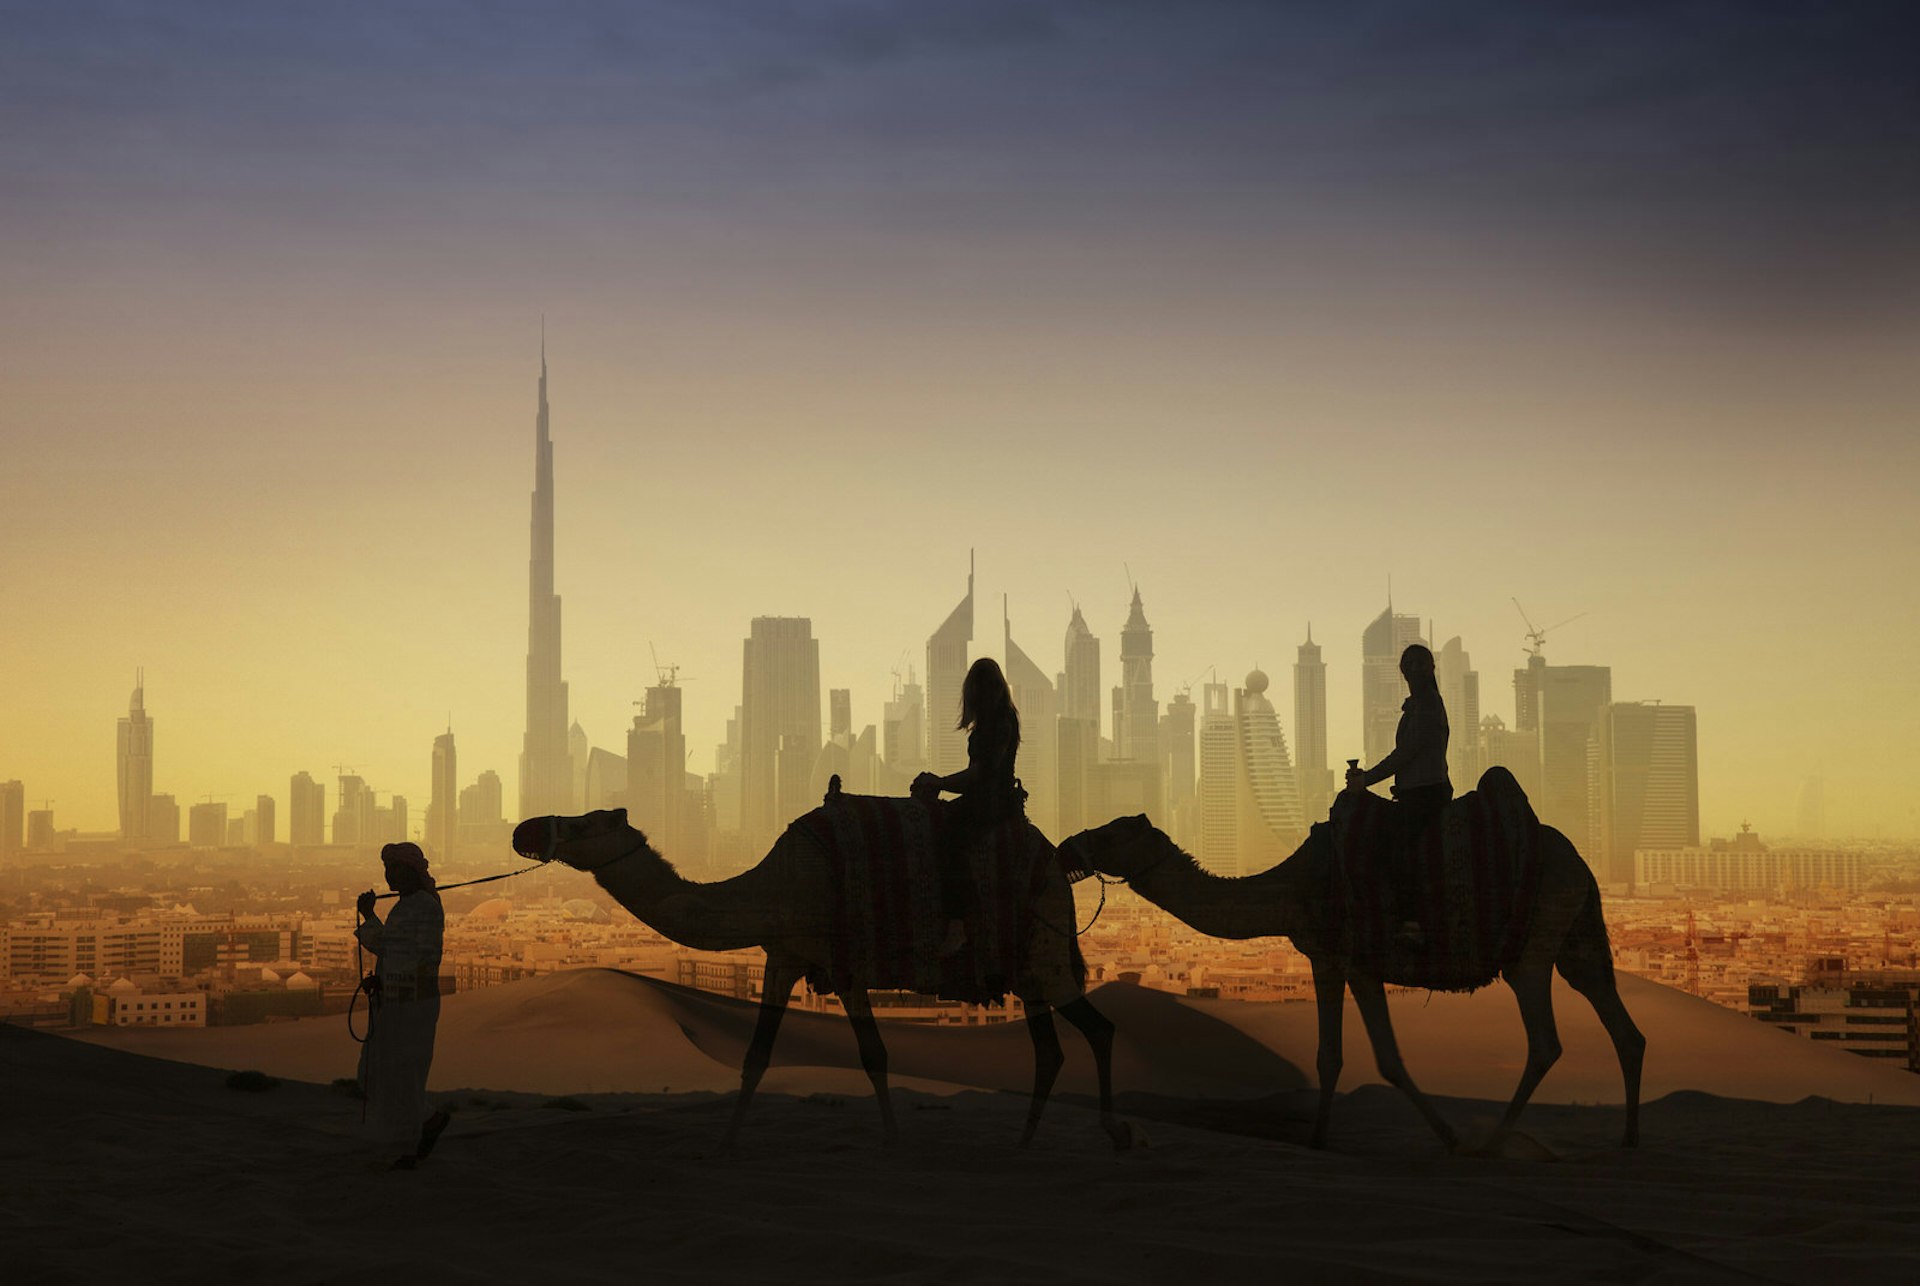 Riding camels in the desert outside Dubai, United Arab Emirates